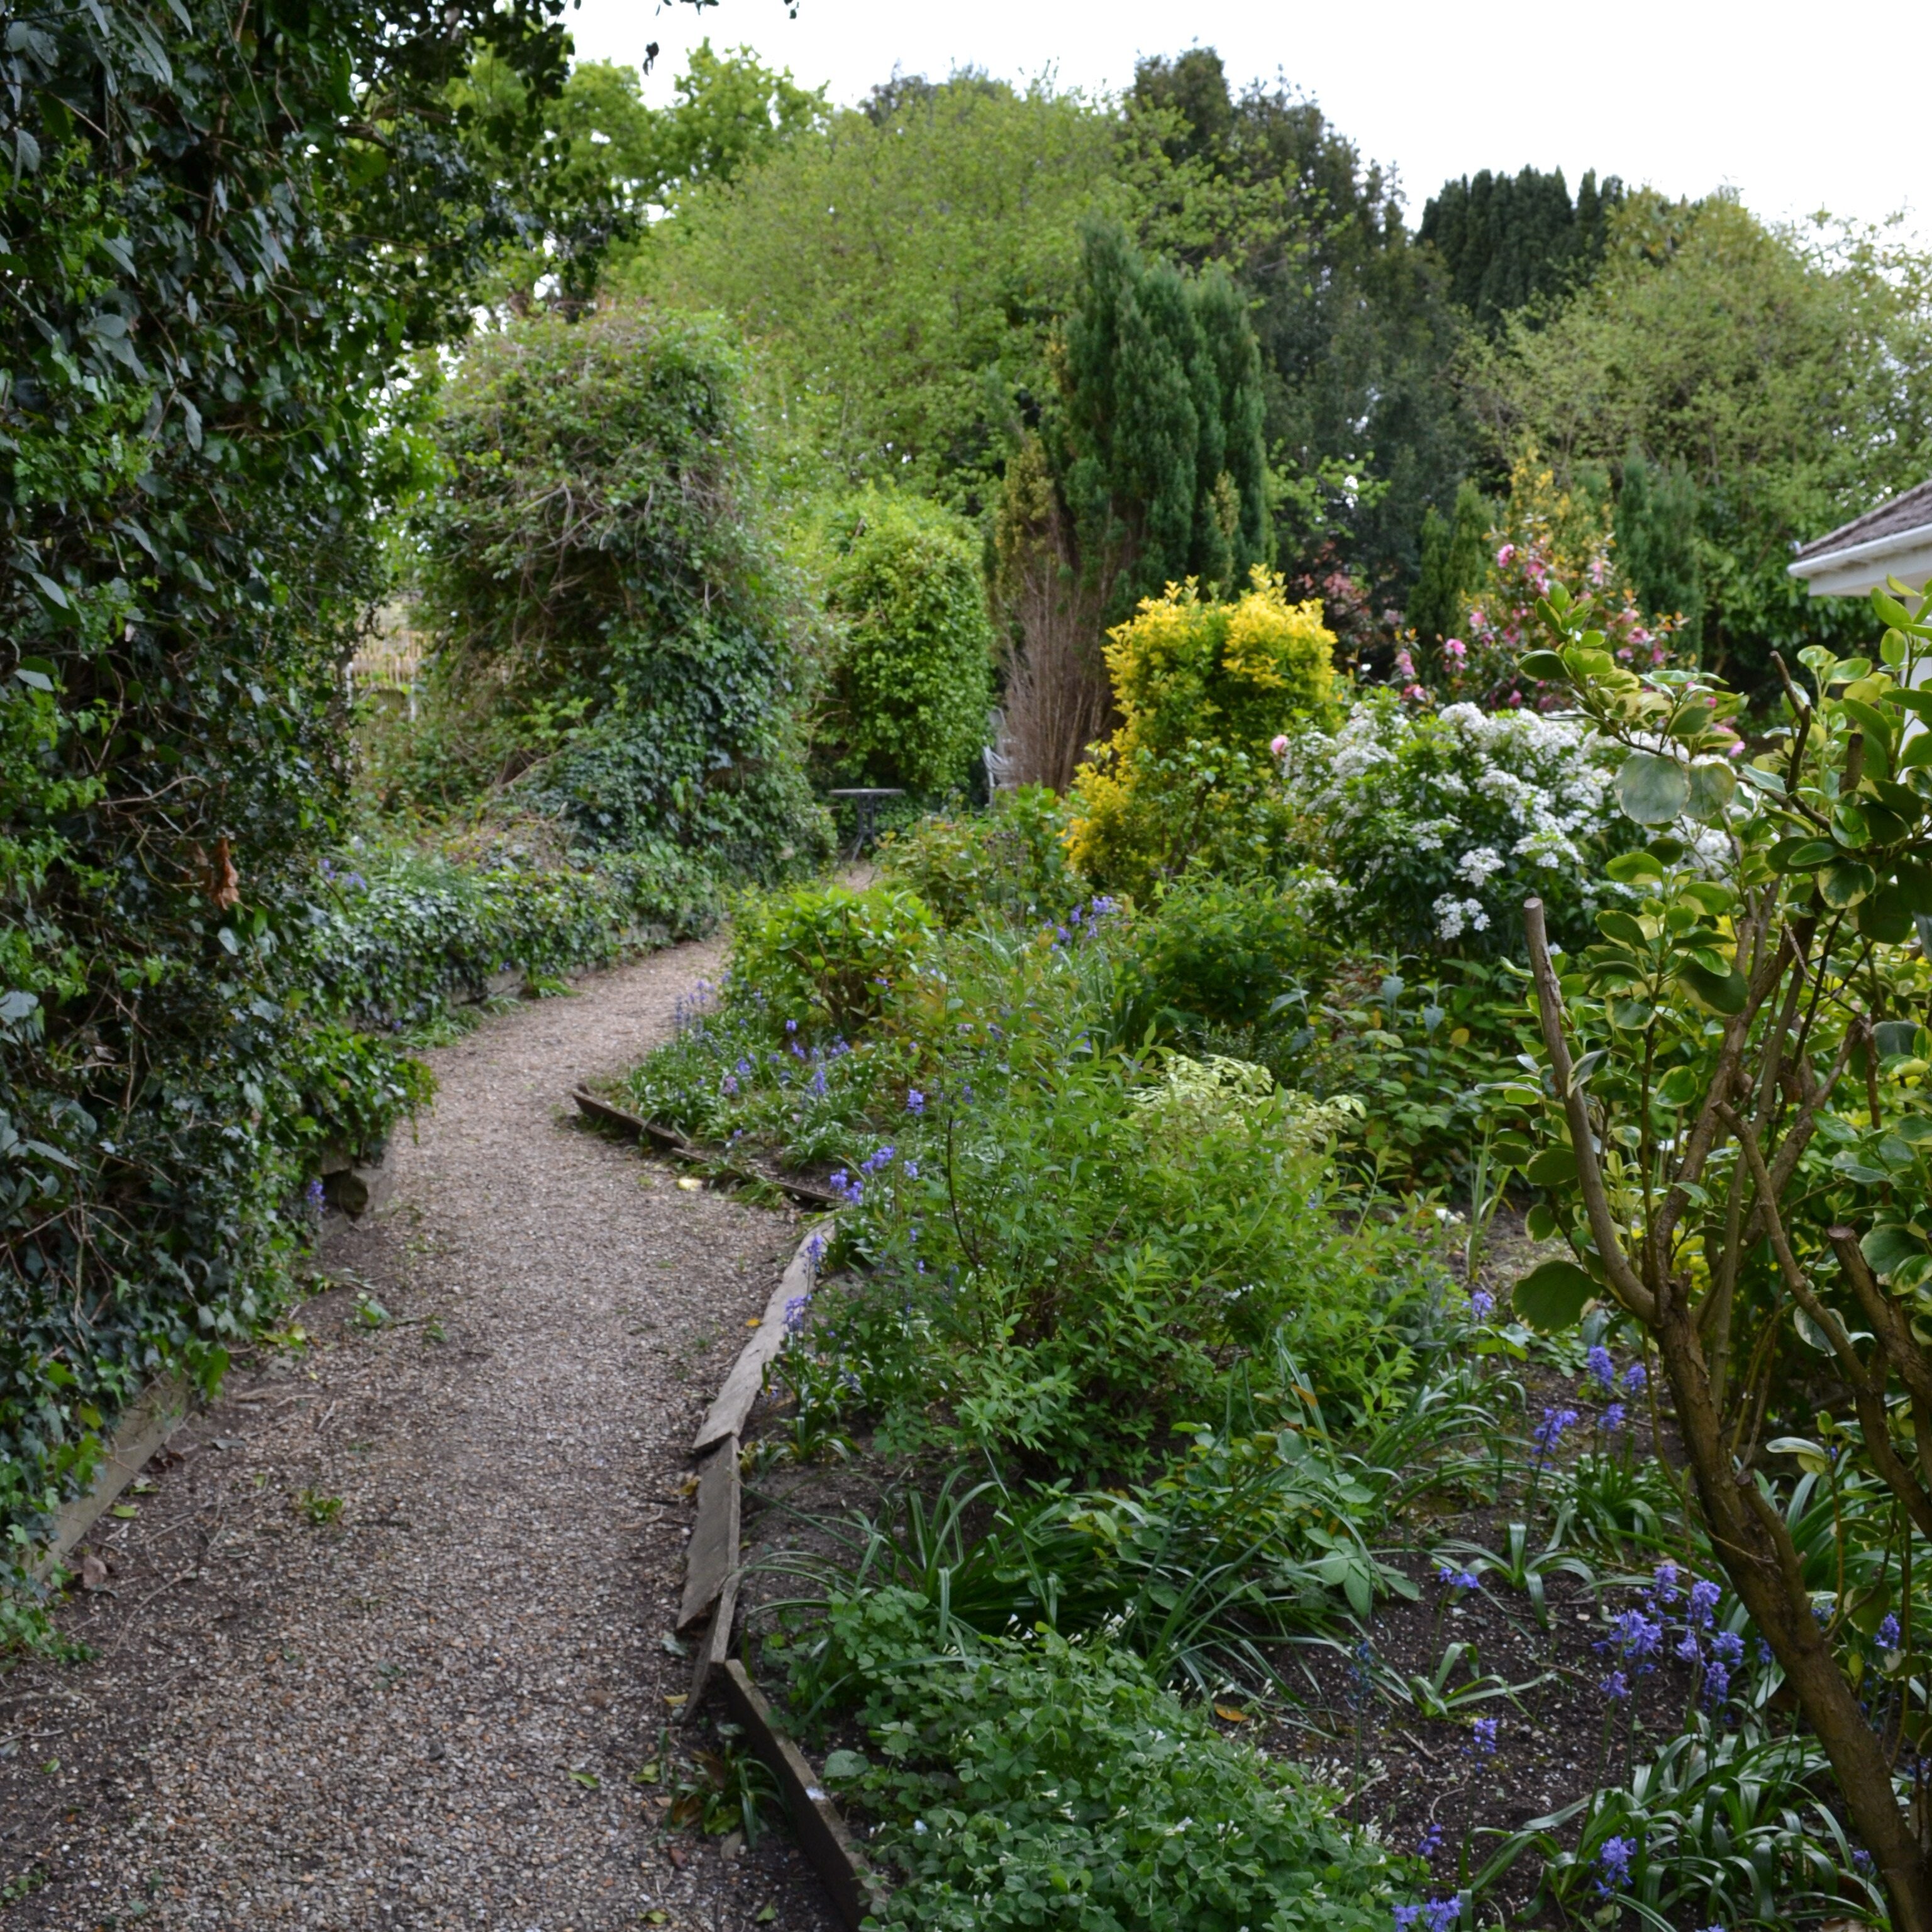 Sensory Garden with gravel paths.